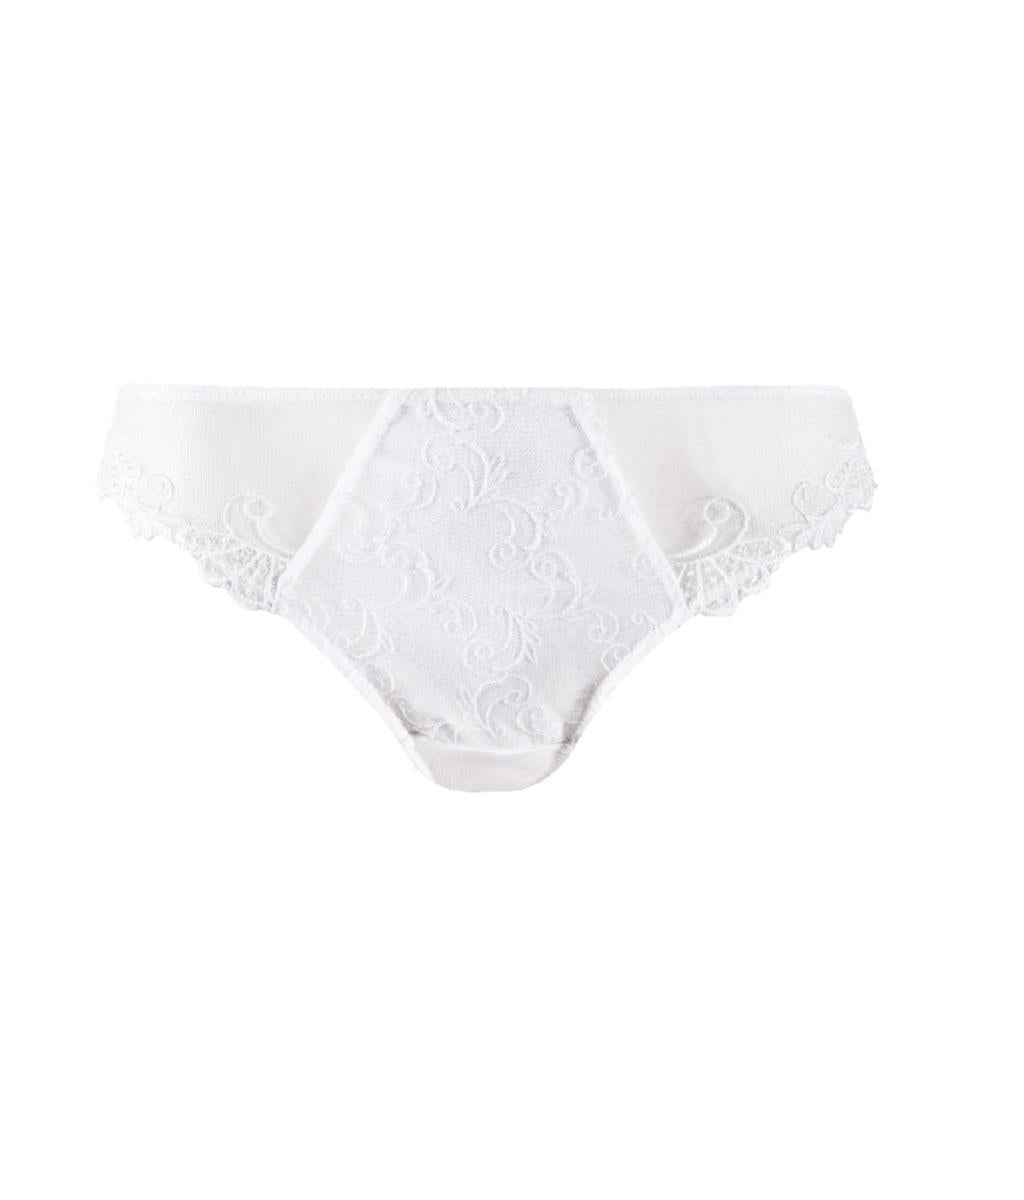 Eprise 'Guipure Charming' (White) Brazilian Brief - Sandra Dee - Product Shot - Front